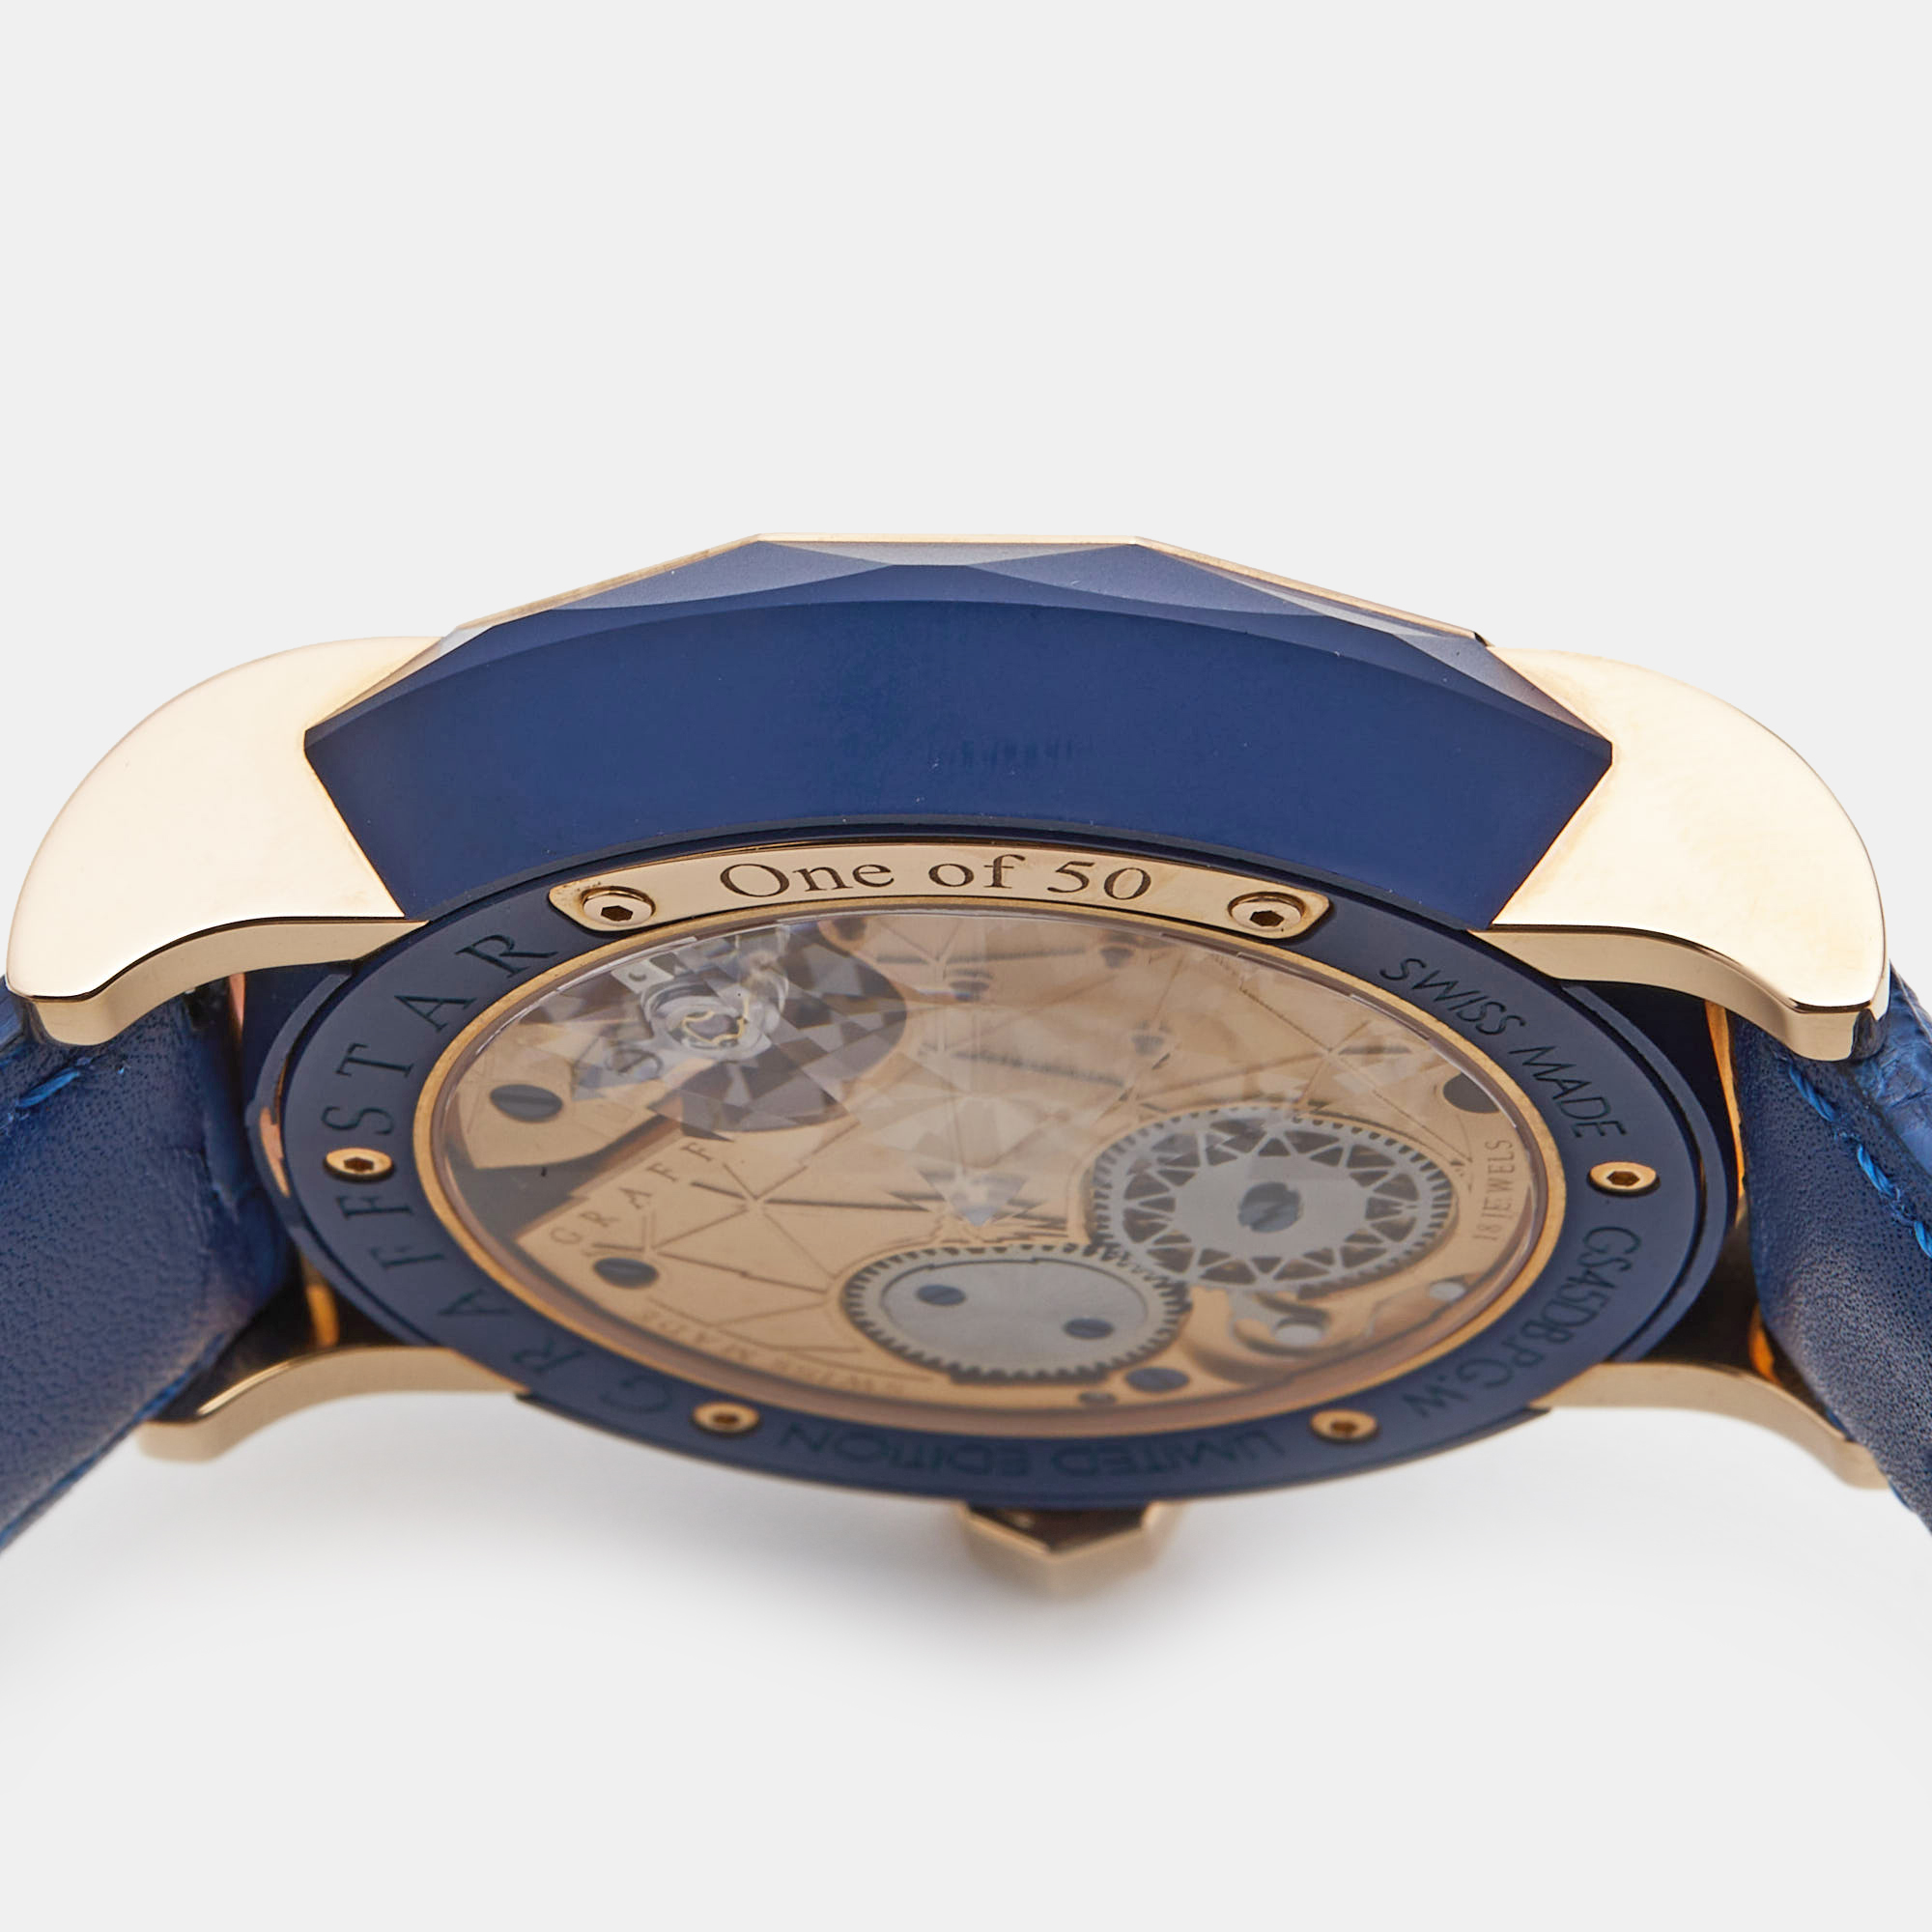 Graff Blue Resin 18K Rose Gold Diamond Alligator Leather Star Grande Date Limited Edition GS45DB.PG.W Men's Wristwatch 45 Mm